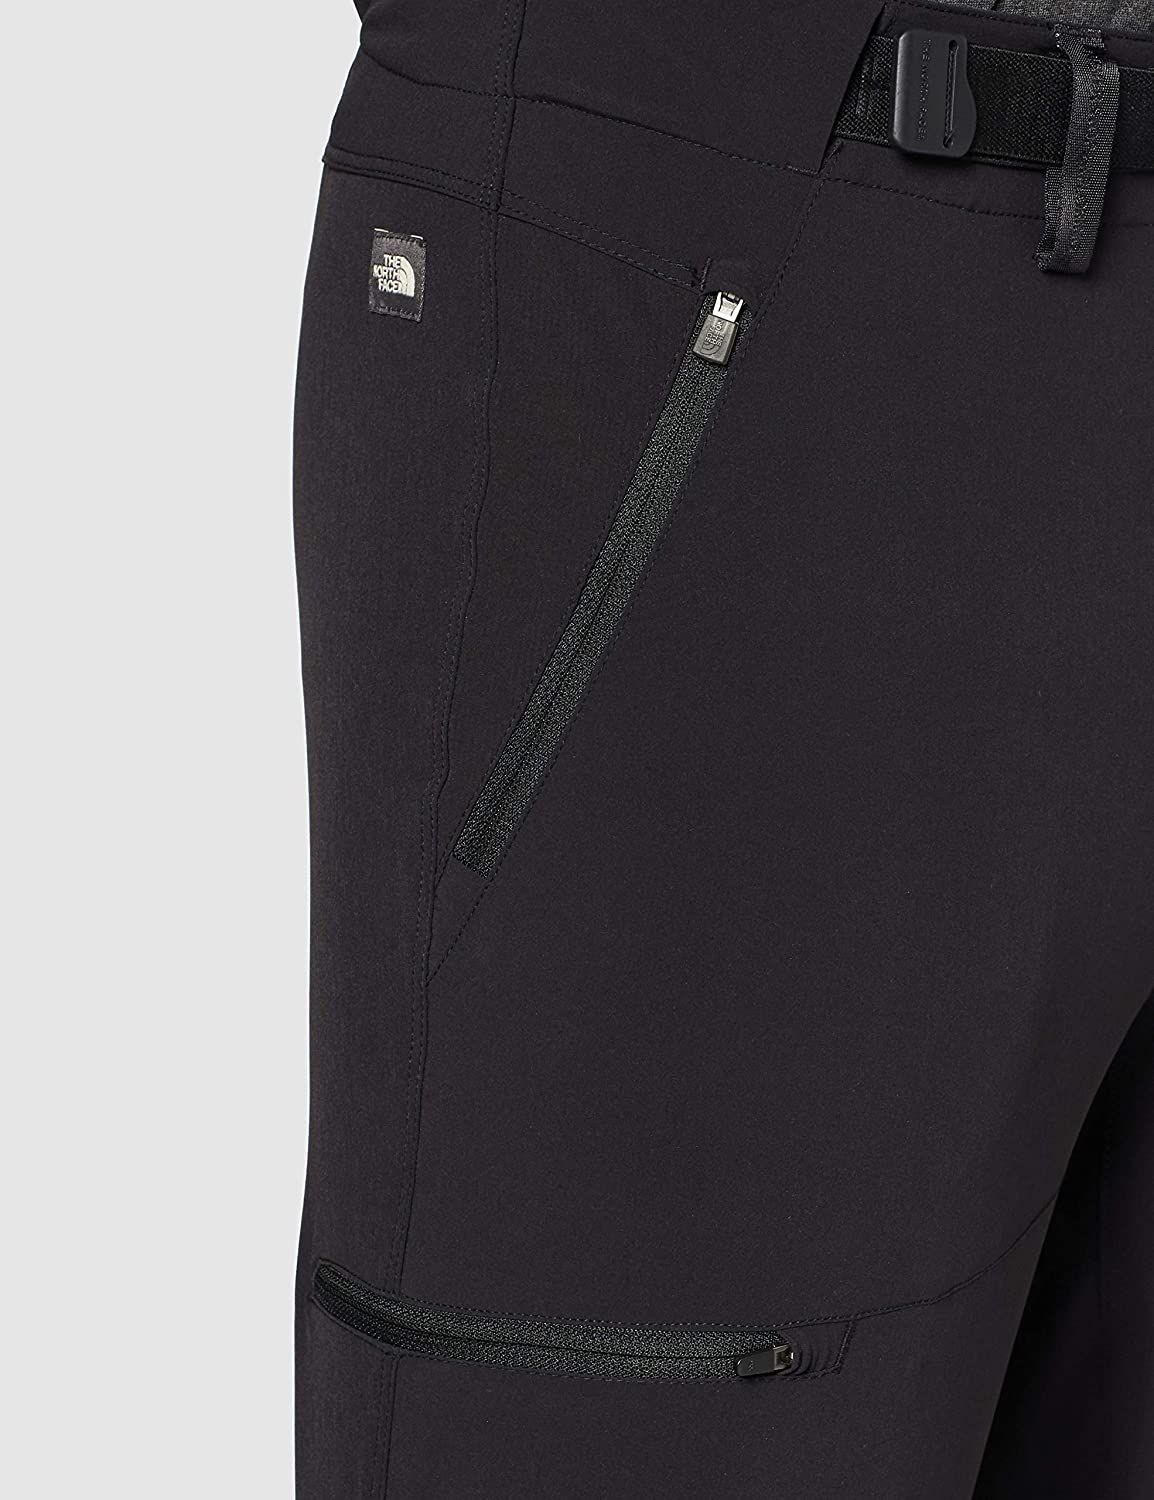 Pantalon de Randonnée Ms Speedlight, TNF Black